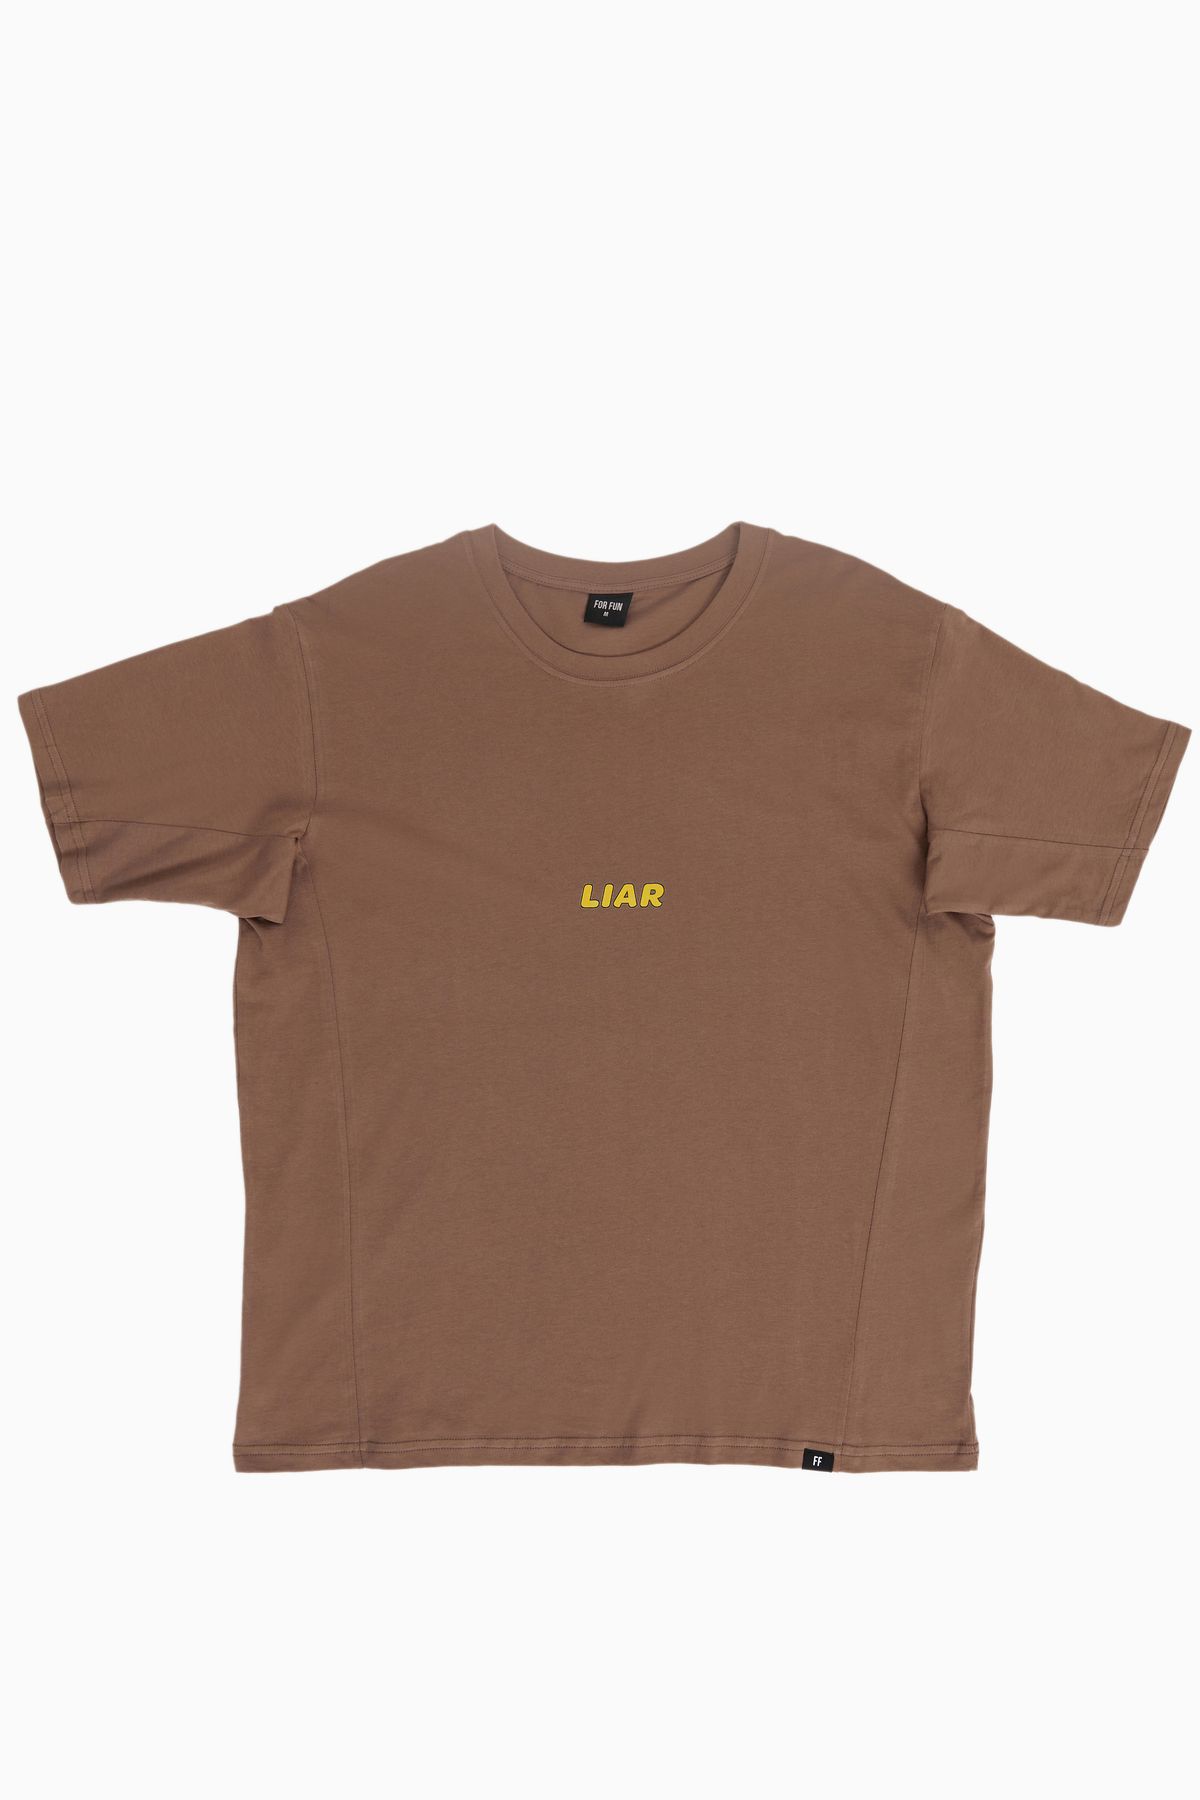 For Fun Liar / Oversize T-shirt